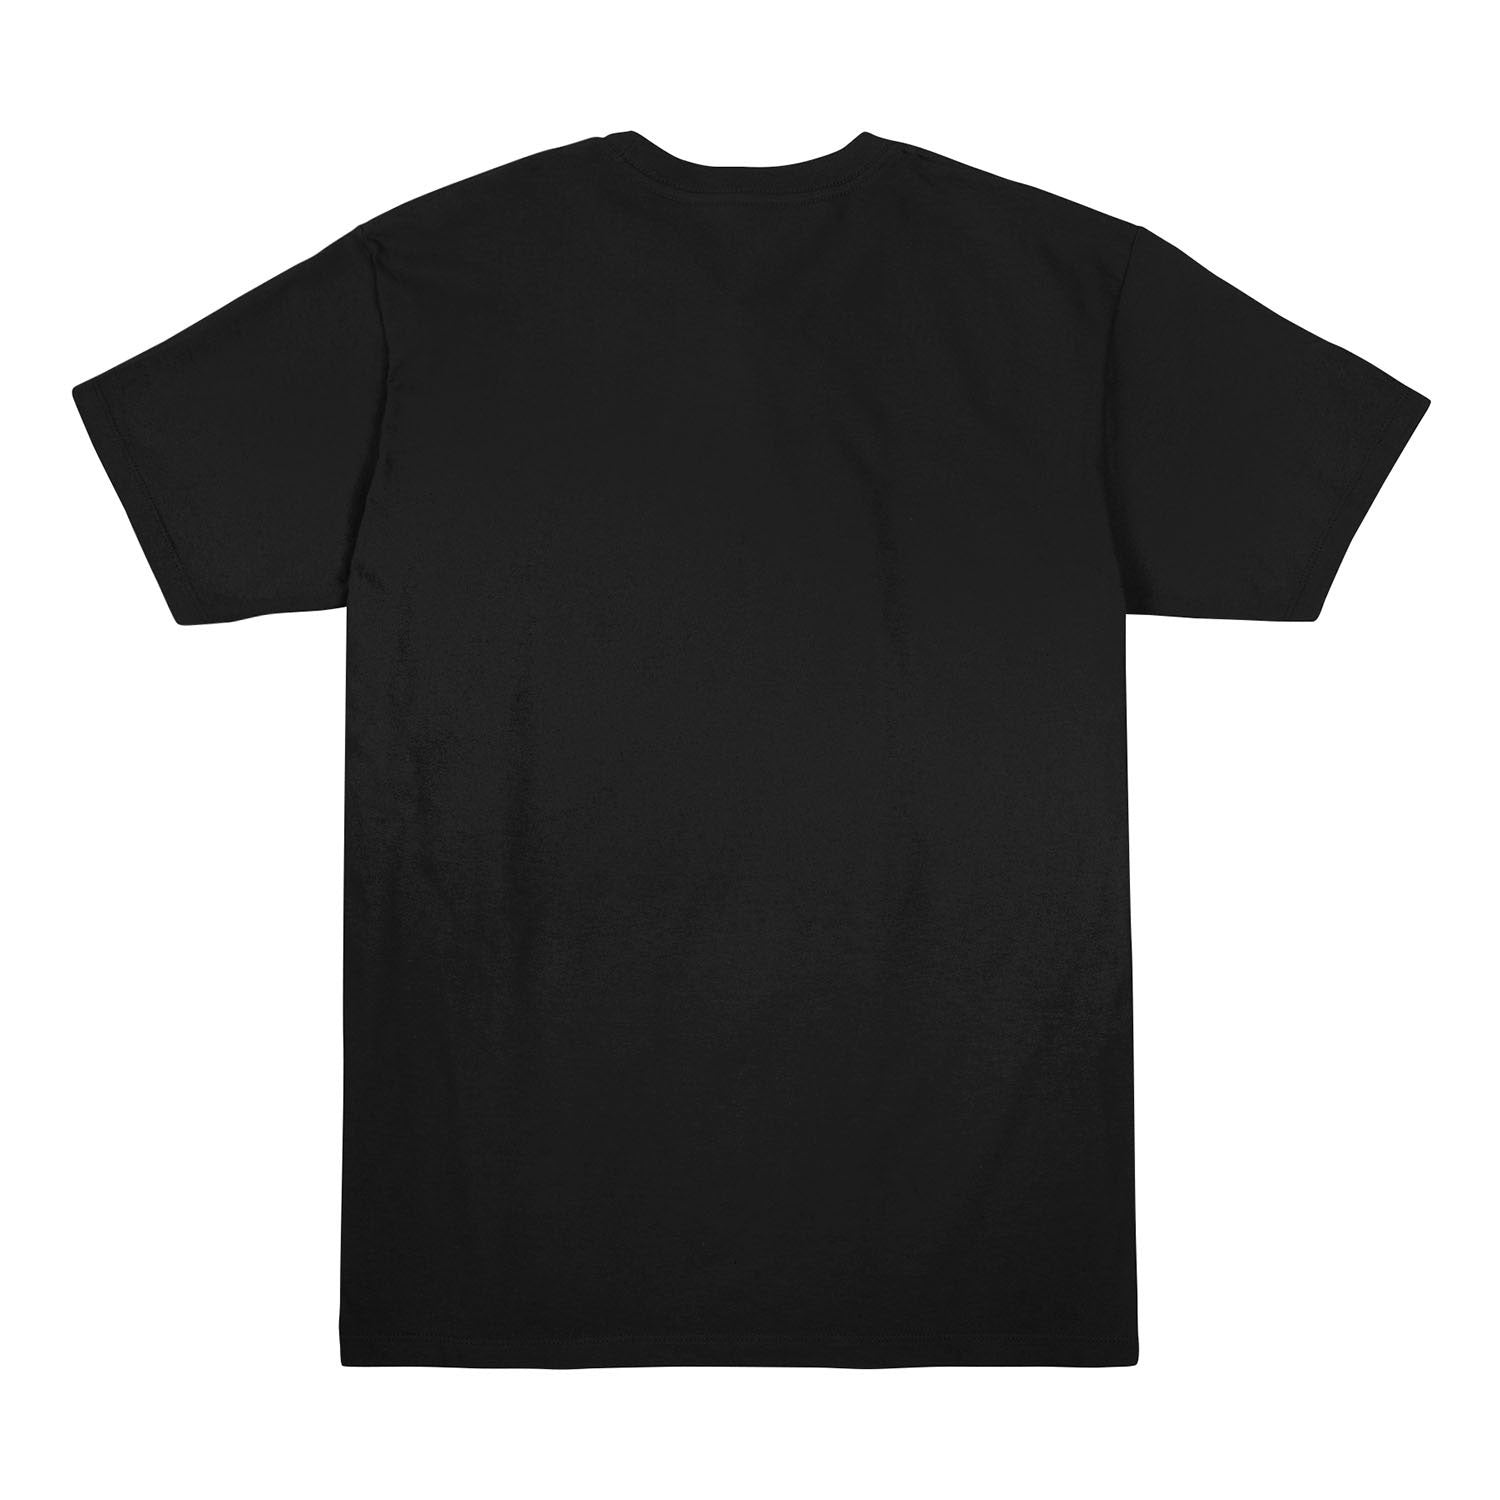 Call of Duty Honey Badger Black T-Shirt - Back View